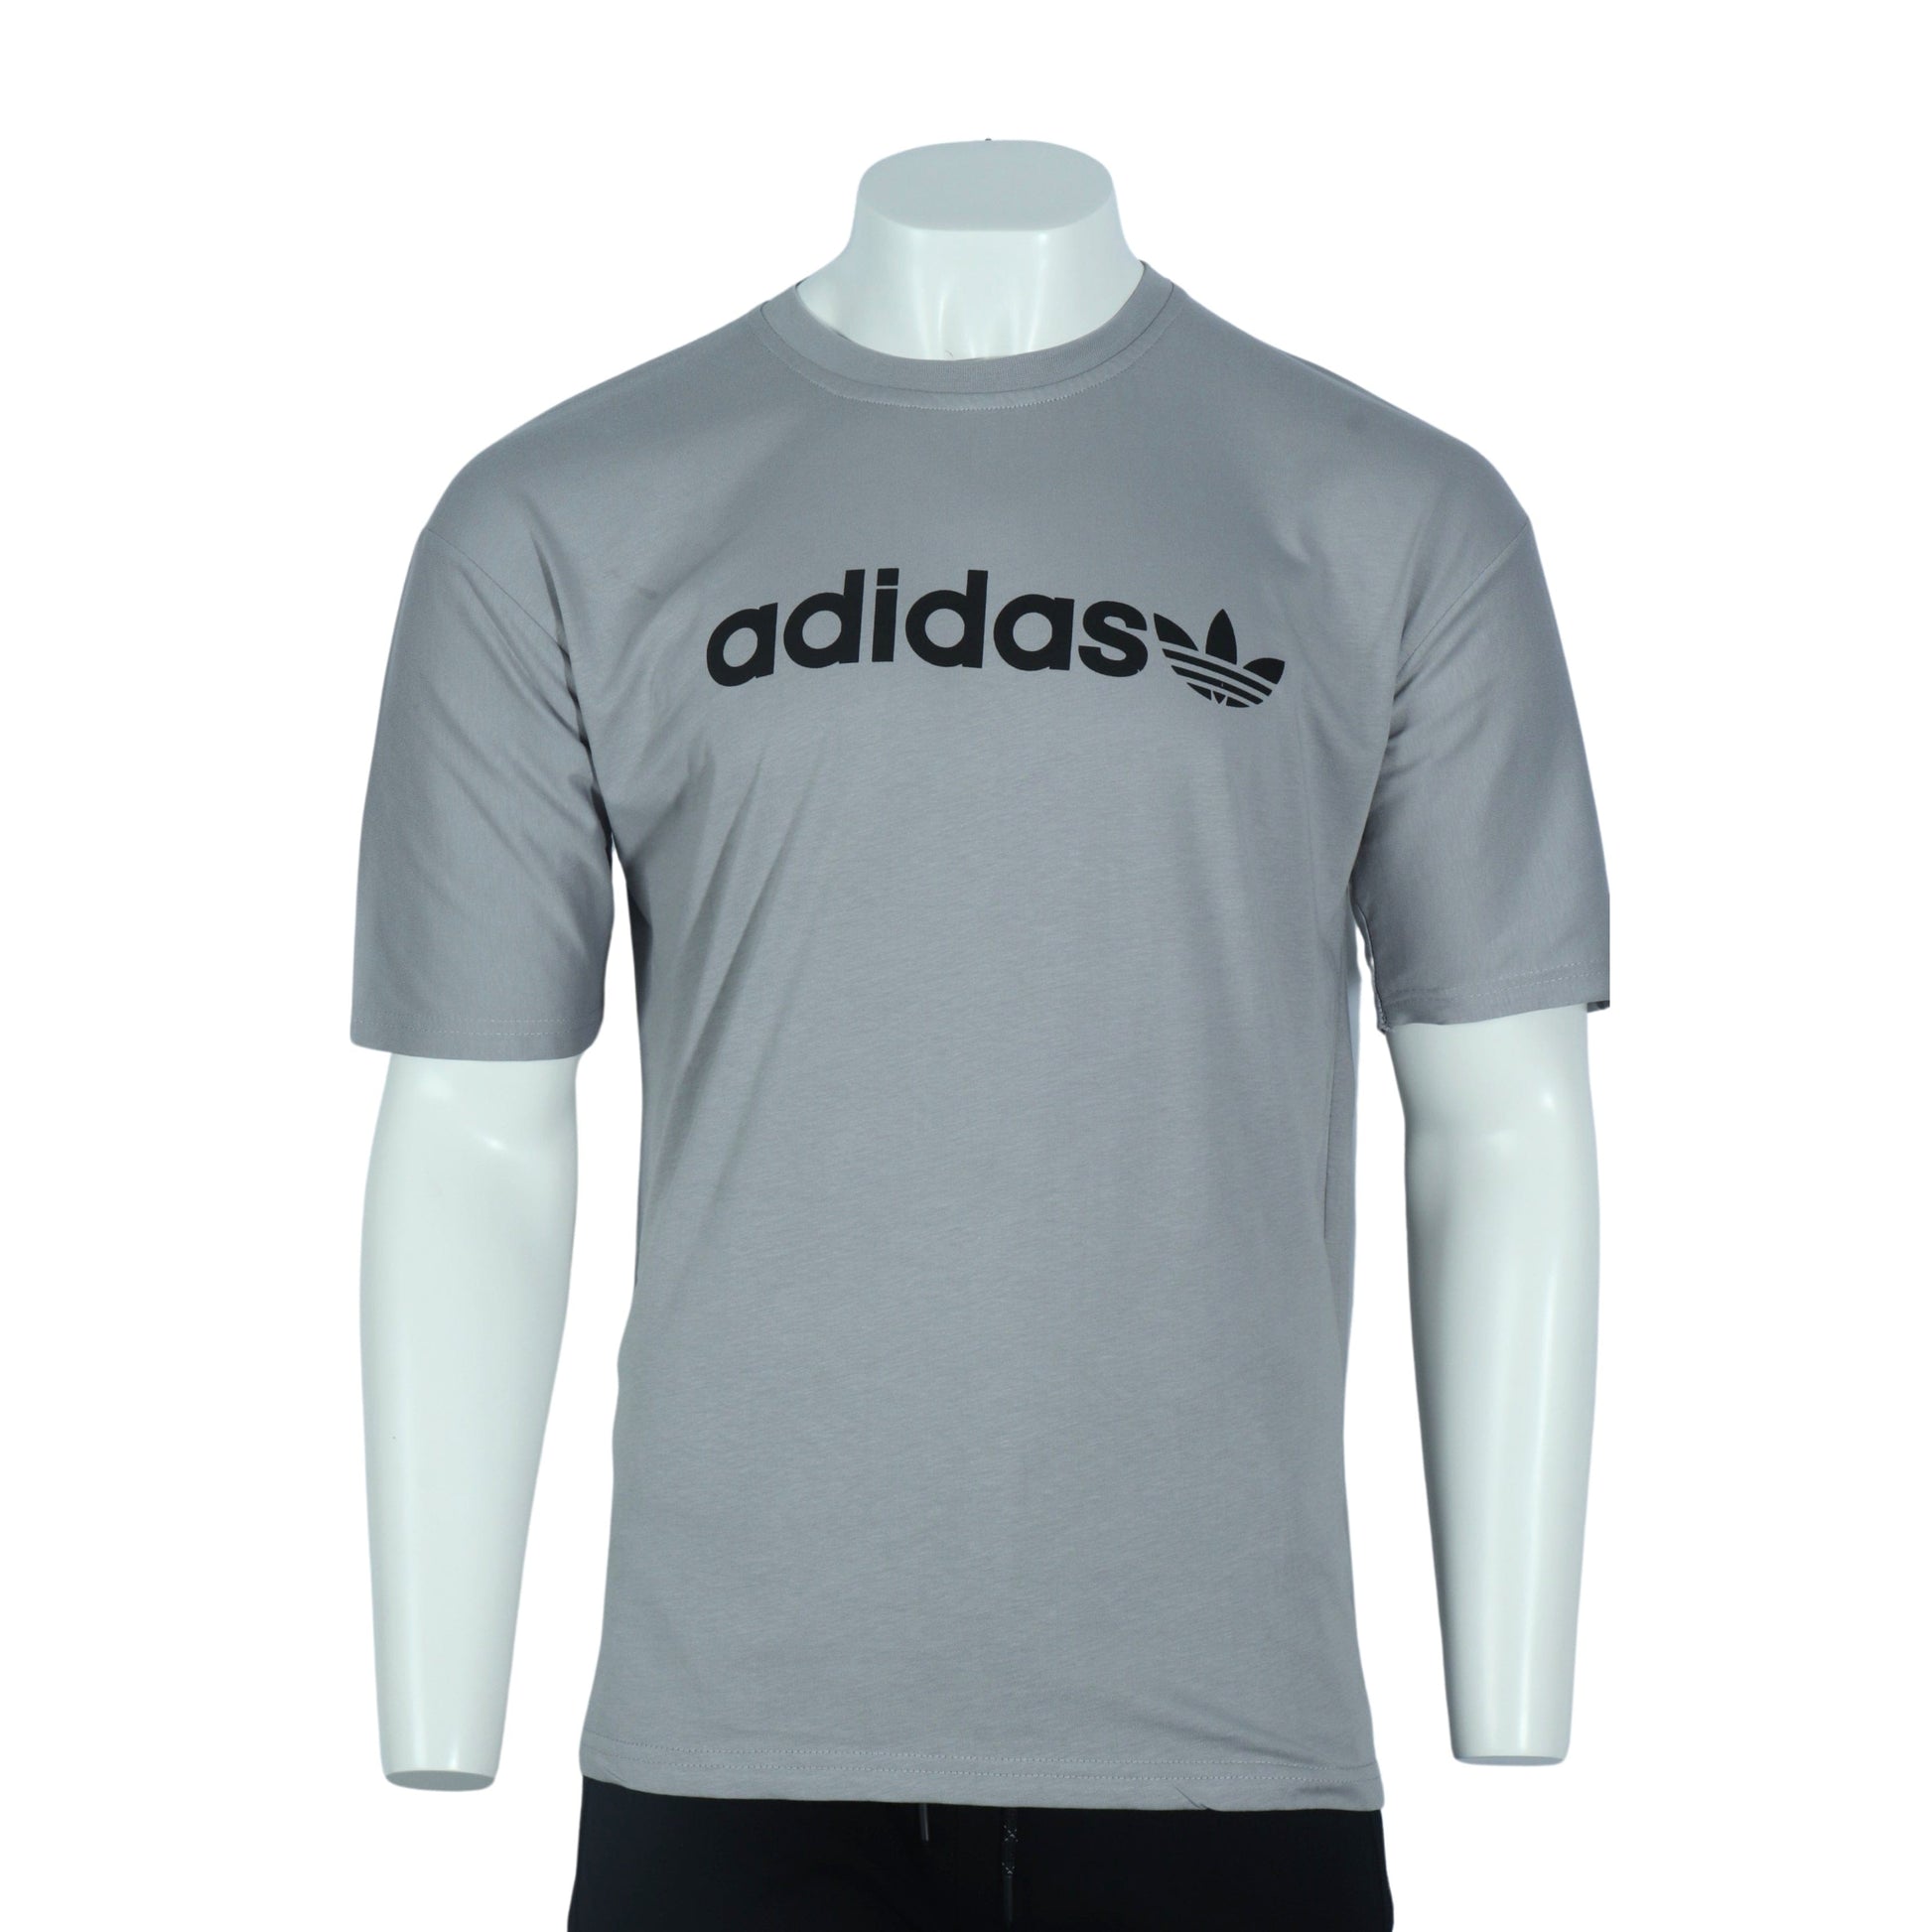 ADIDAS Mens Tops M / Grey ADIDAS - Round Neck T-shirt